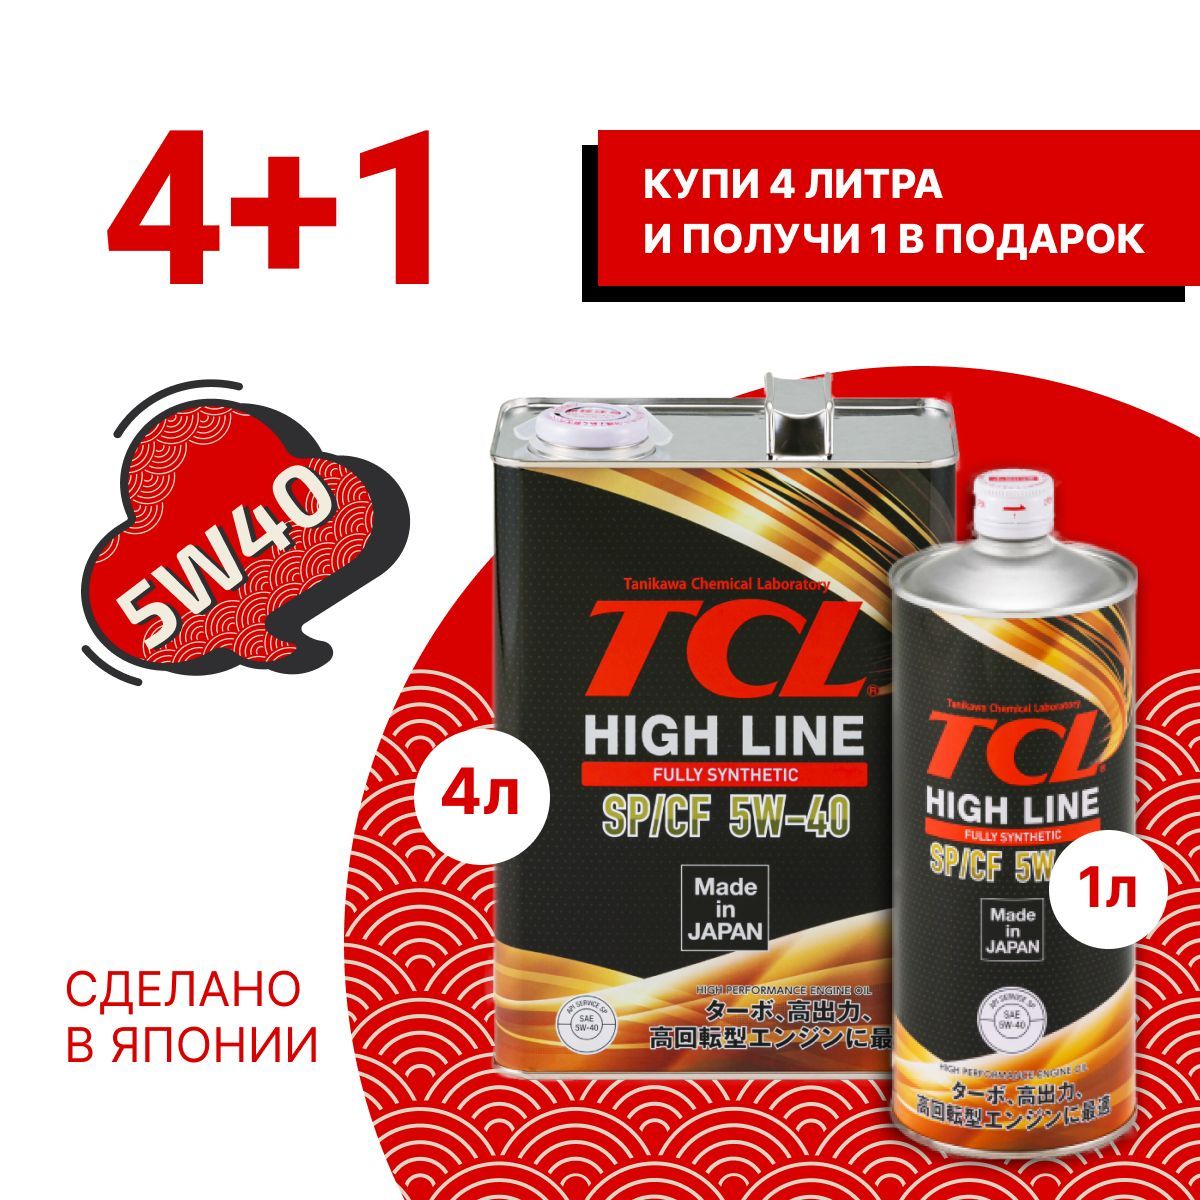 TCL 5w30 1 промо набор. TCL масло. Честный отзыв о масле ТСЛ 5 40. Масло tcl 5w40